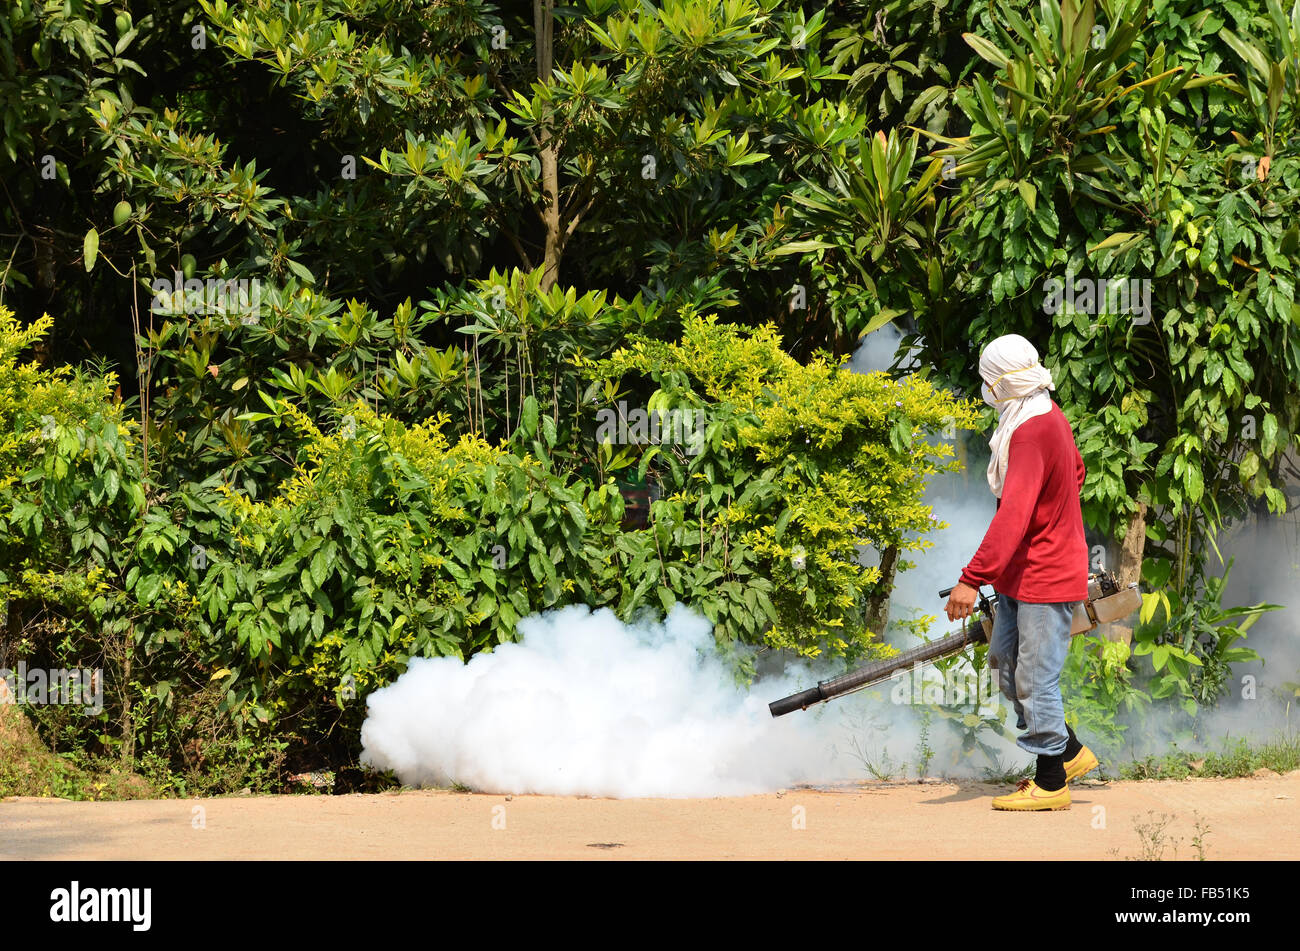 man Fogging to prevent spread of dengue fever in thailand Stock Photo